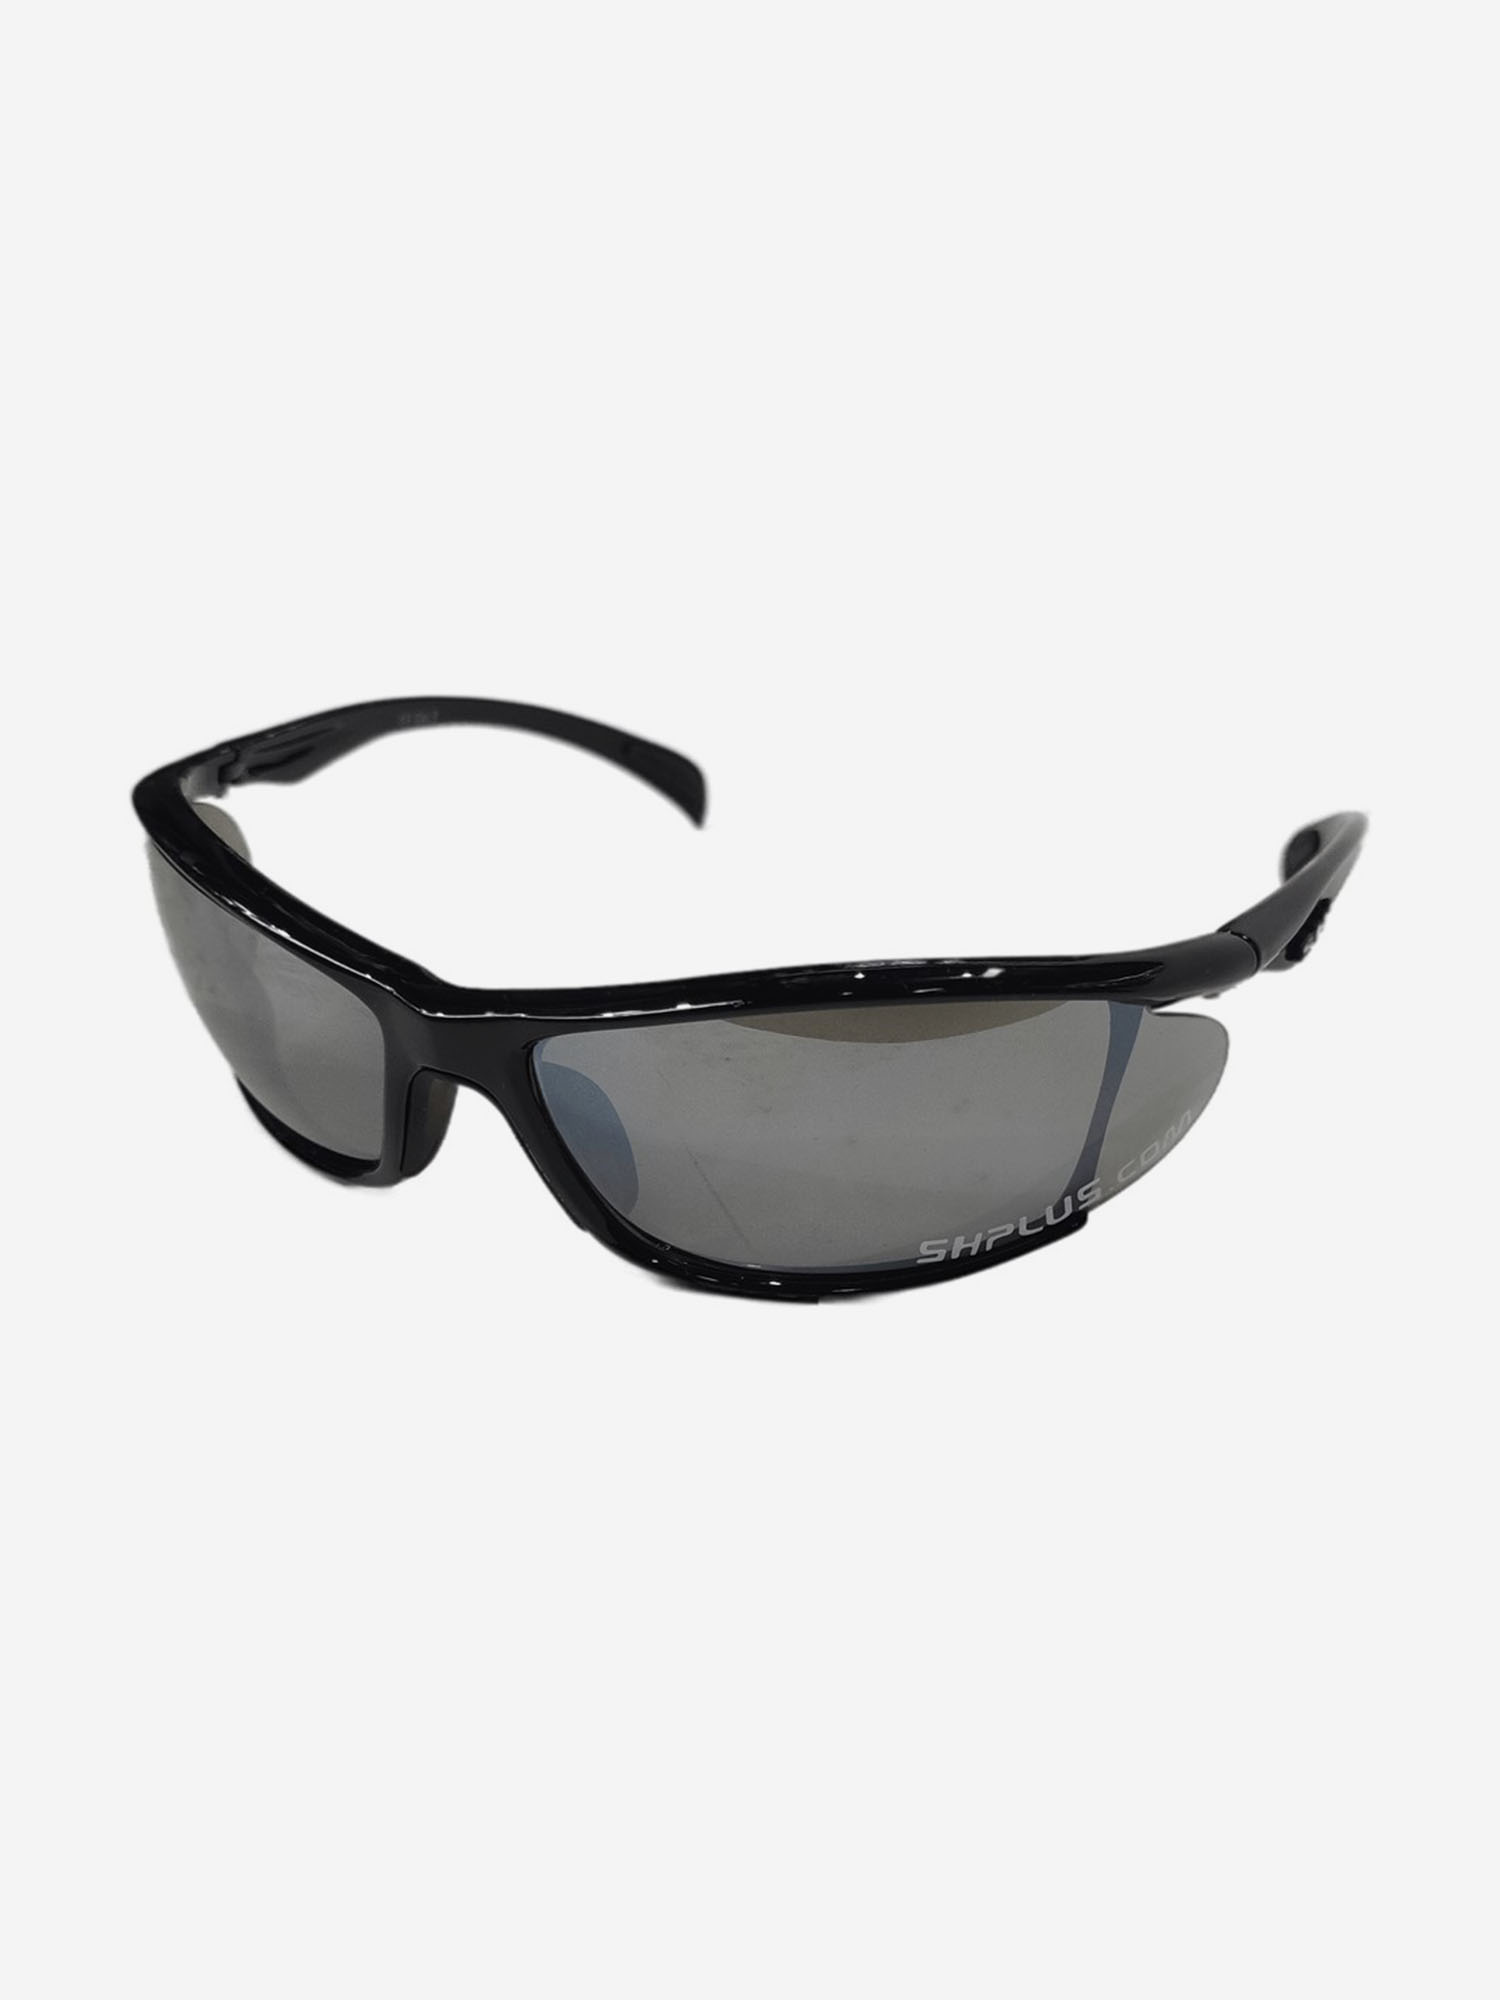 Спортивные очки SH+ RG 4110 black/smoke (+доп. линза Clear+кофр), Черный